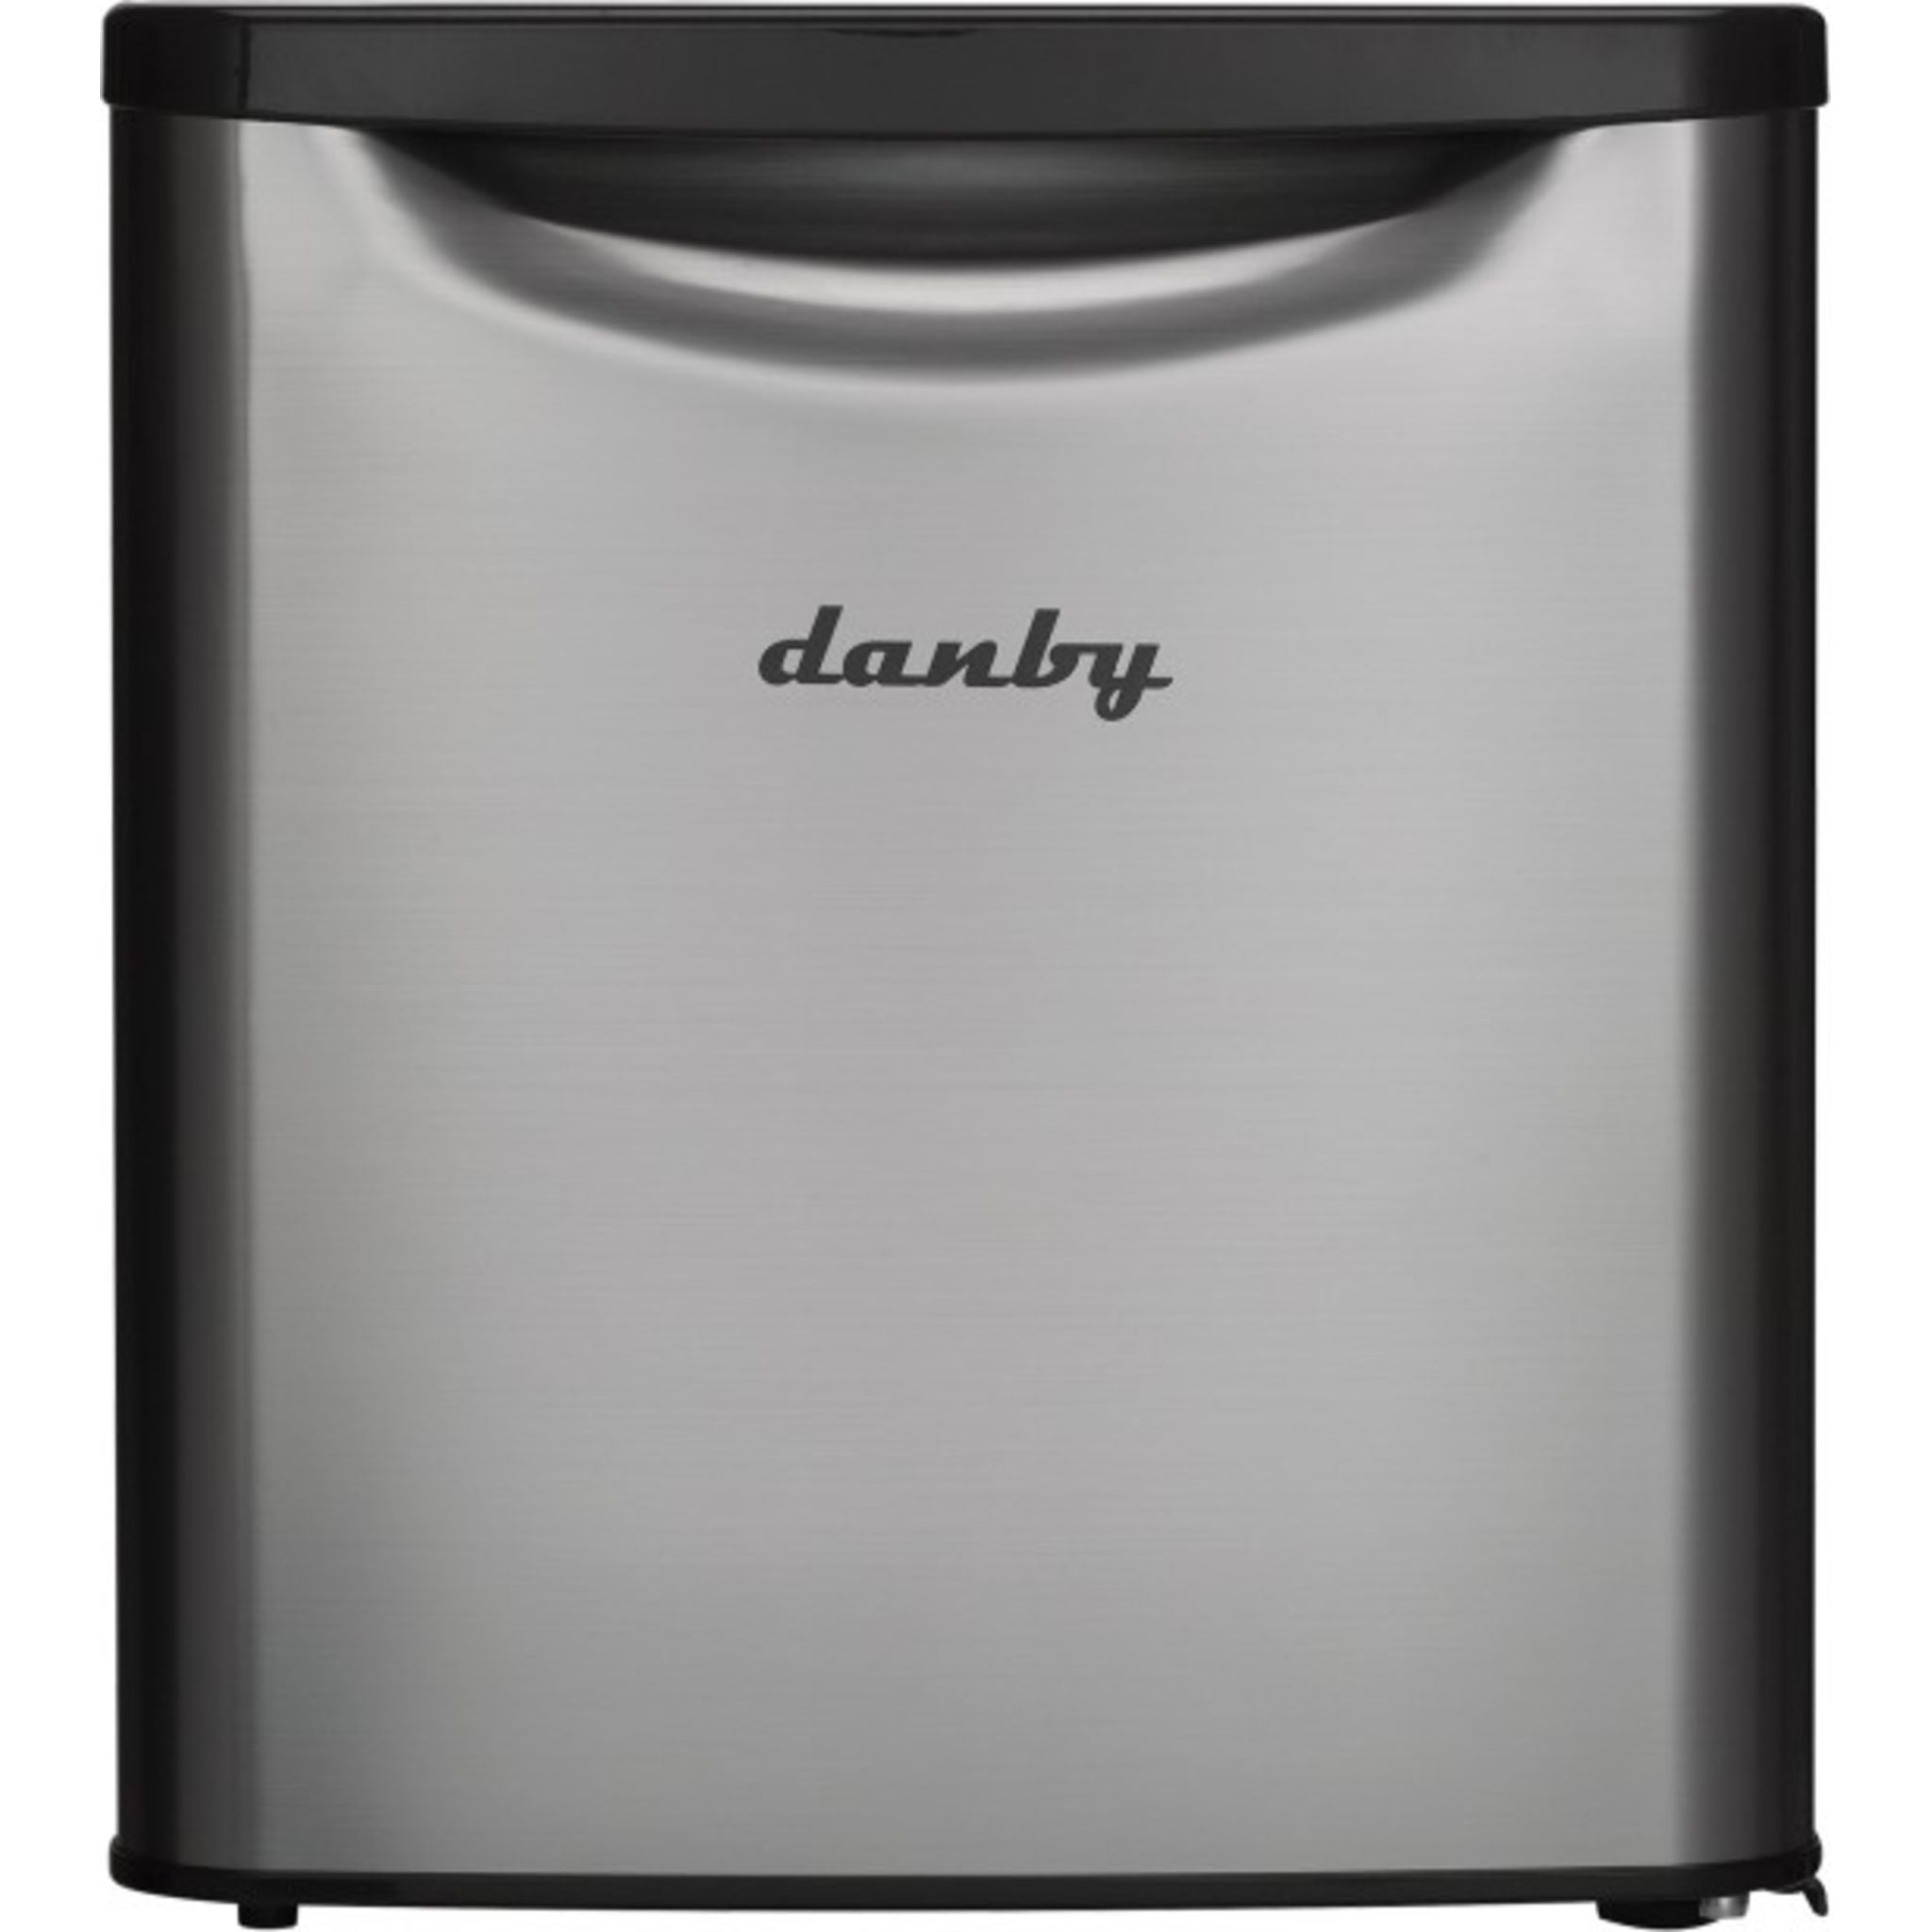 Danby, Danby Compact Fridge (DAR017A3BSLDB-6) - Stainless Steel